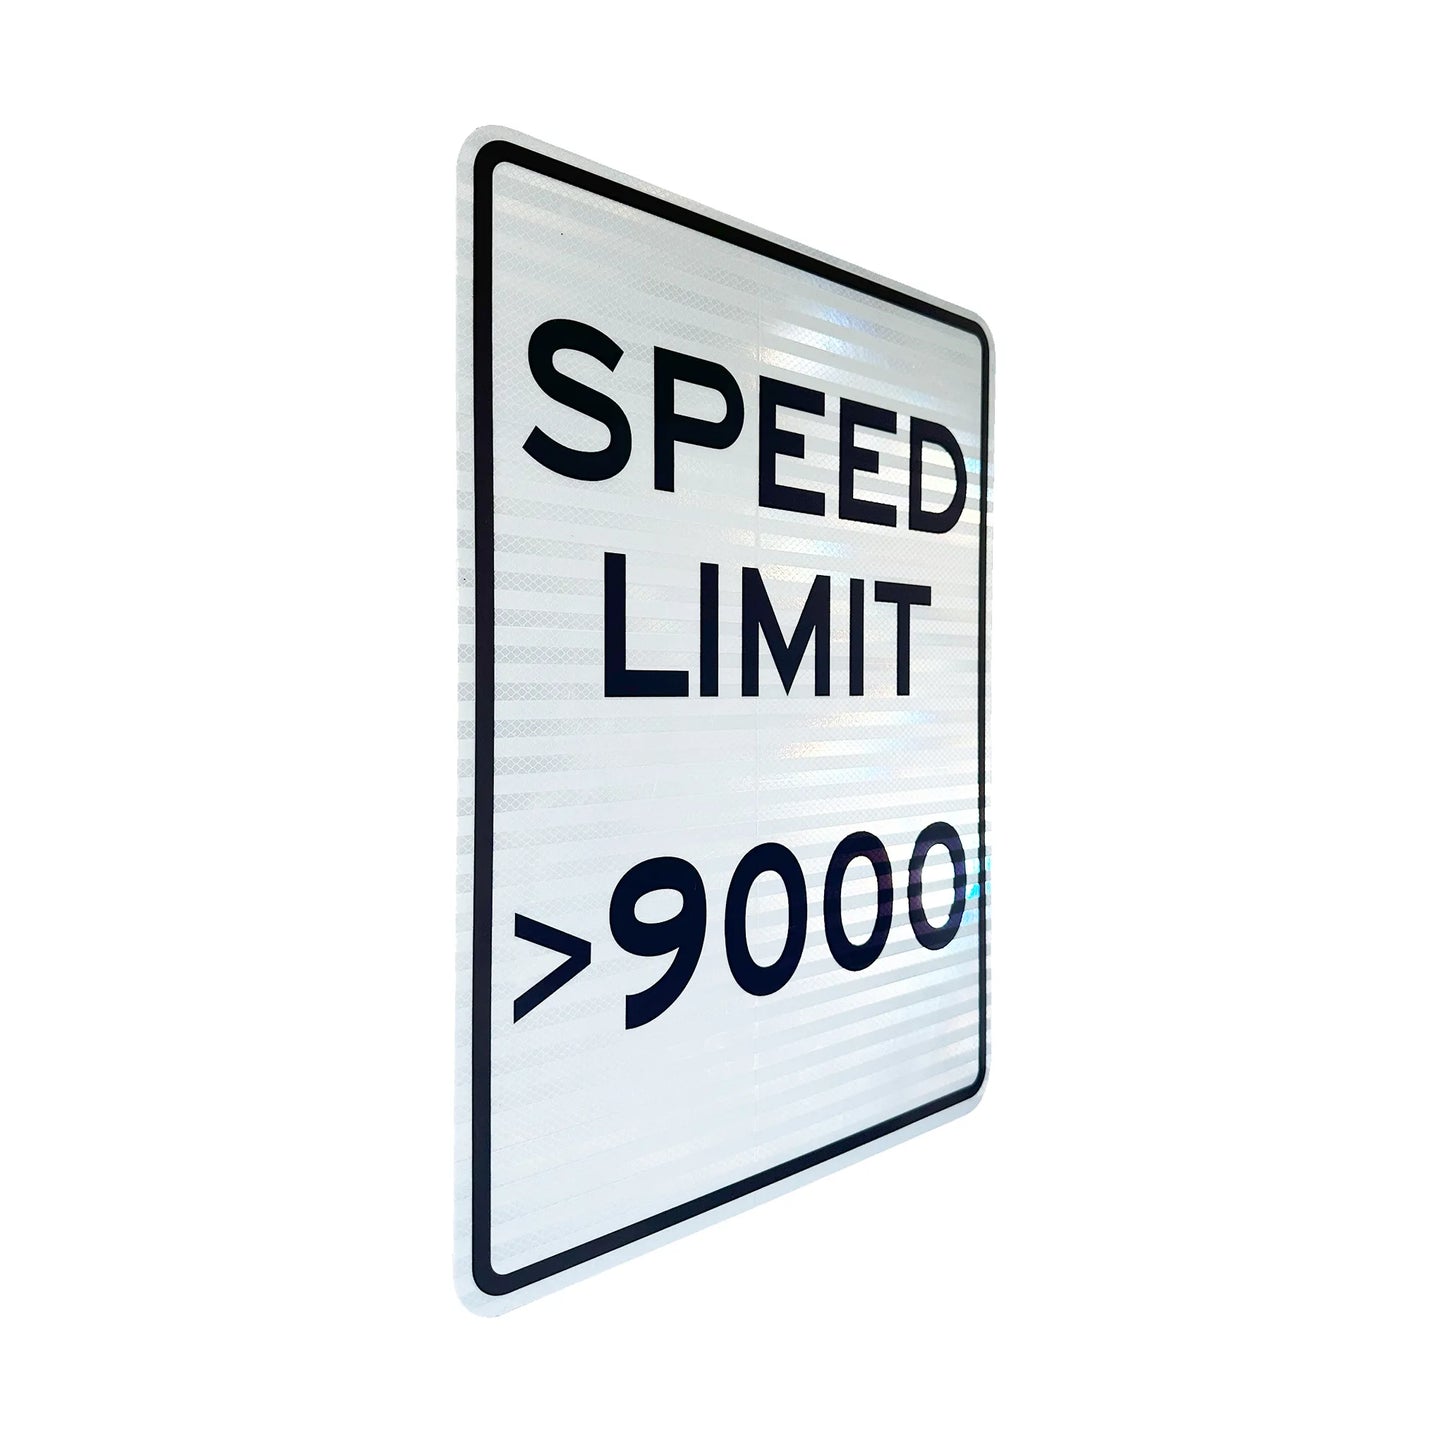 SPEED LIMIT >9000 Streetsign